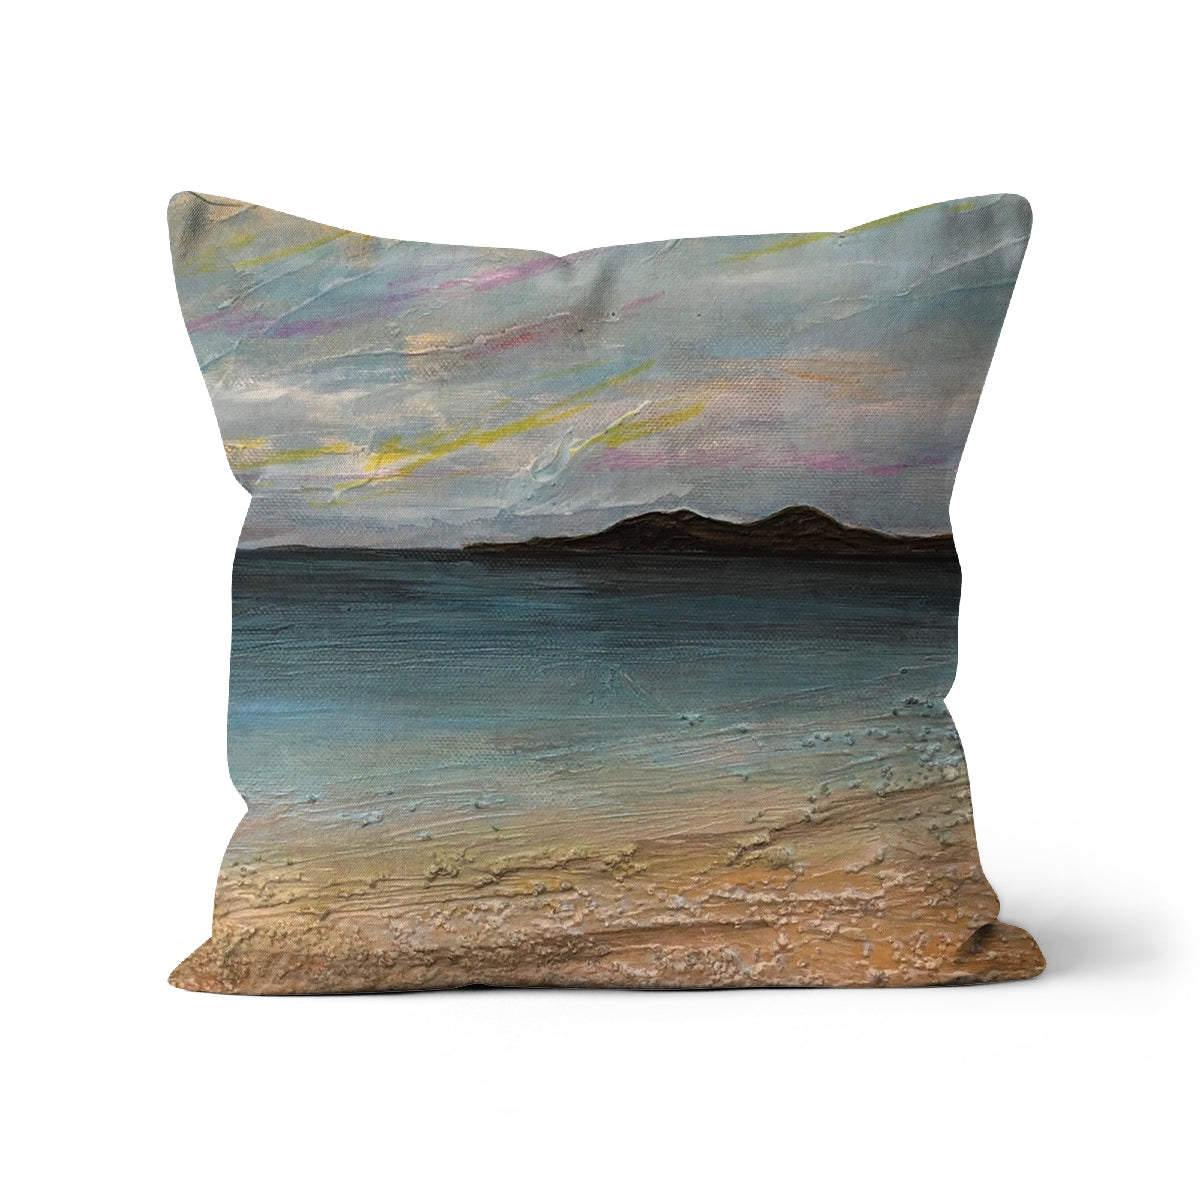 Garrynamonie Beach South Uist Art Gifts Cushion-Cushions-Hebridean Islands Art Gallery-Linen-22"x22"-Paintings, Prints, Homeware, Art Gifts From Scotland By Scottish Artist Kevin Hunter